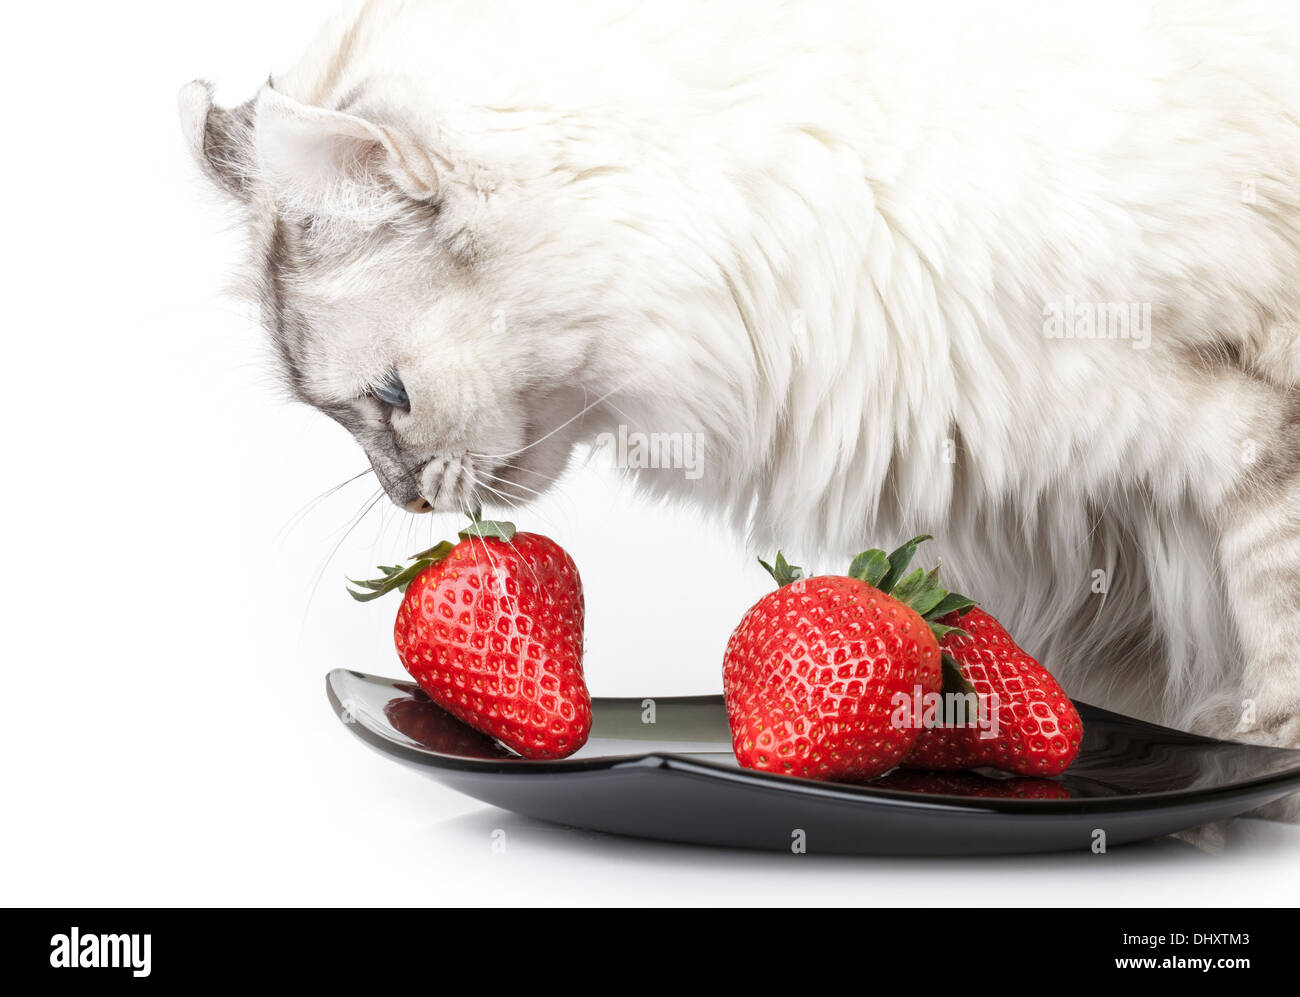 White cat carefully eats fresh strawberry from black plate Stock Photo